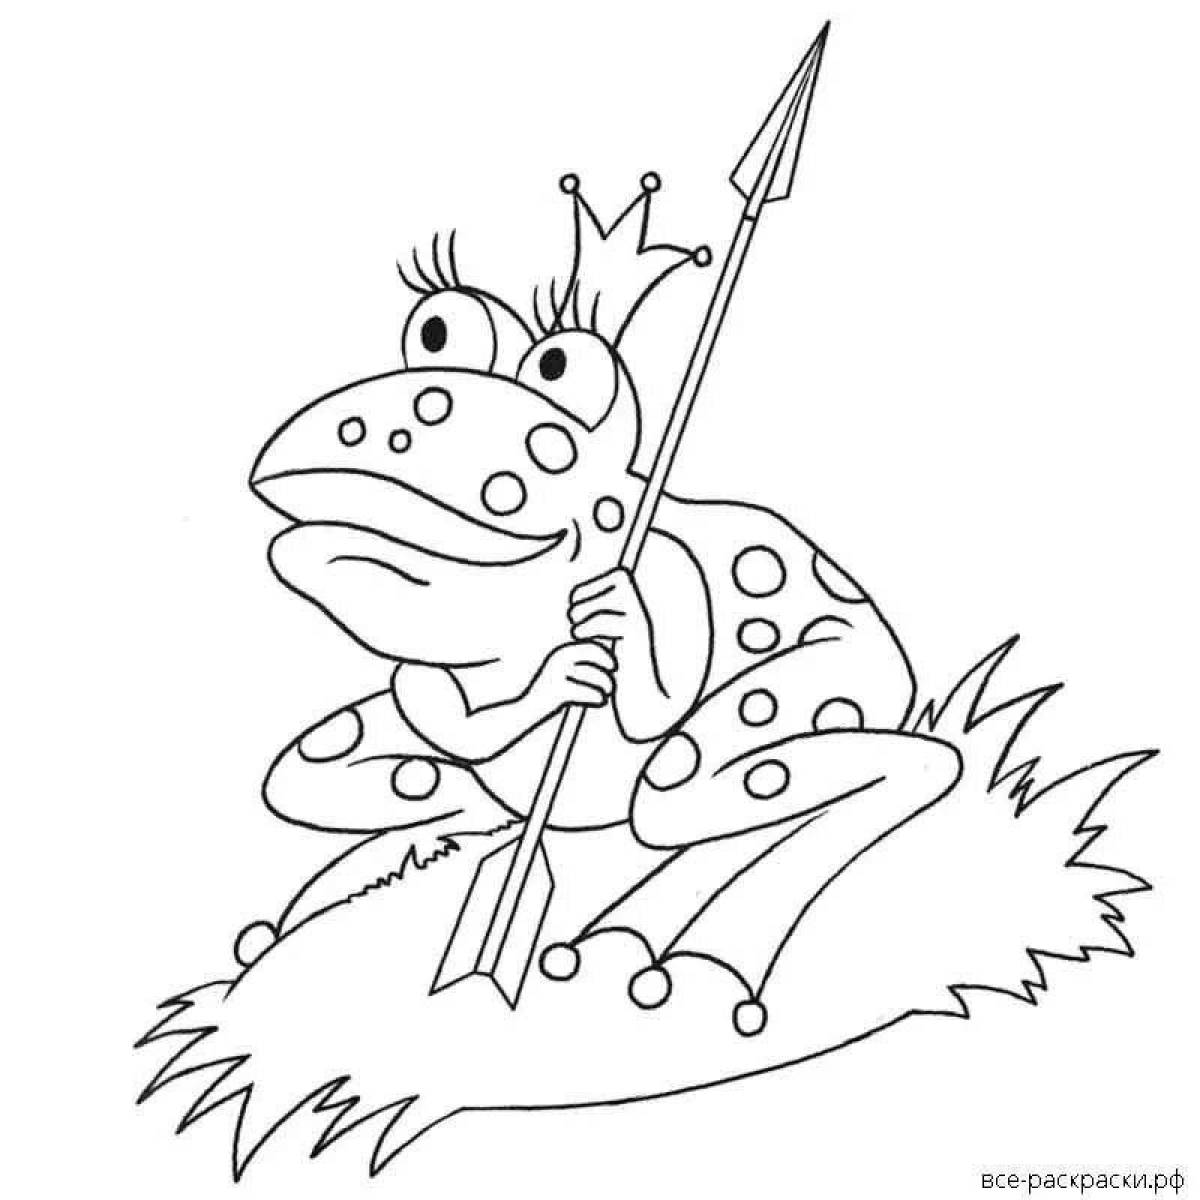 Иллюстрация к сказке Царевна лягушка разукрашка